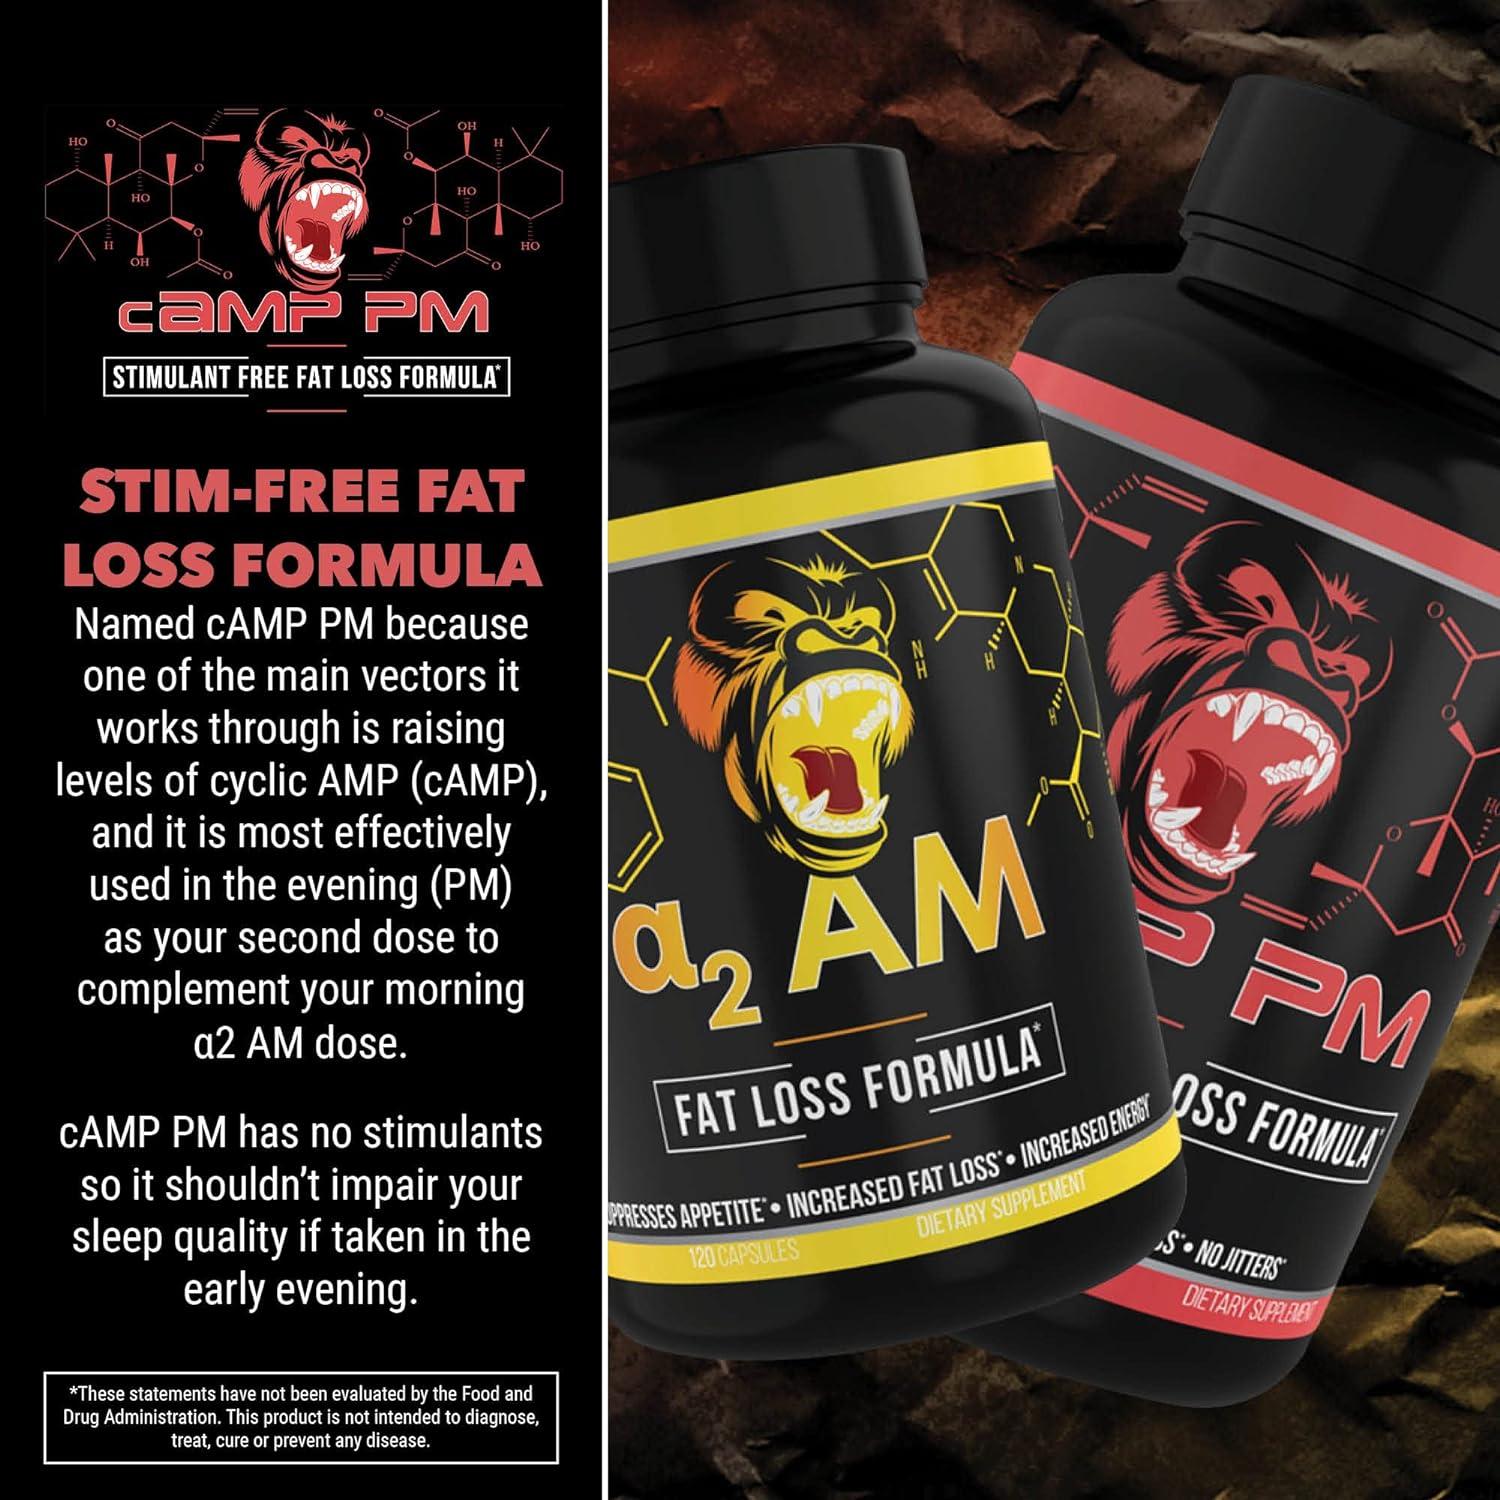 Gorilla Mind Camp PM Fat Burner Capsules Stimulant-Free Fat Loss  Formula/Suppresses Appetite Increased Fat Loss No Jitters (120 Capsules)